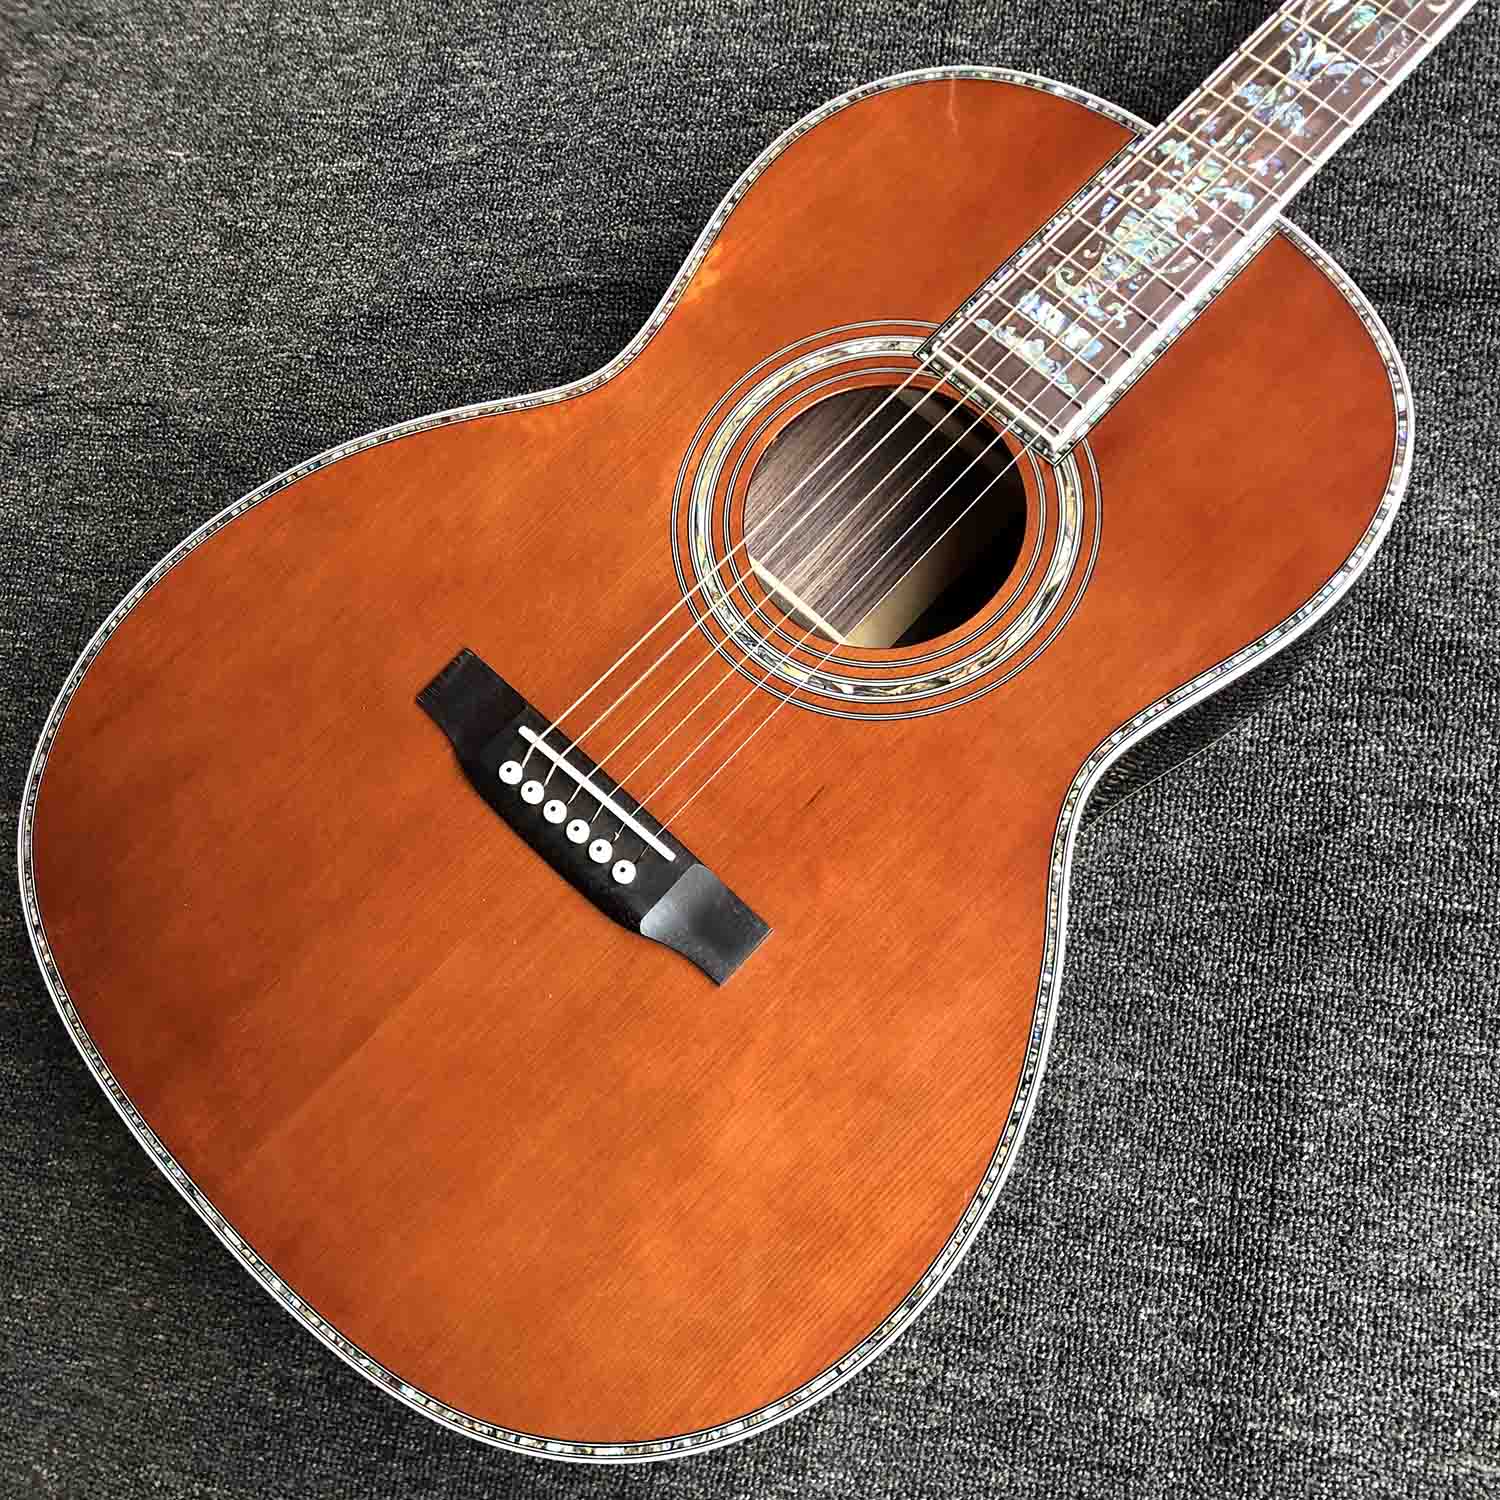 Anpassad OOO Body Solid Spruce Top Acoustic Guitar i röd färg acceptera gitarr OEM